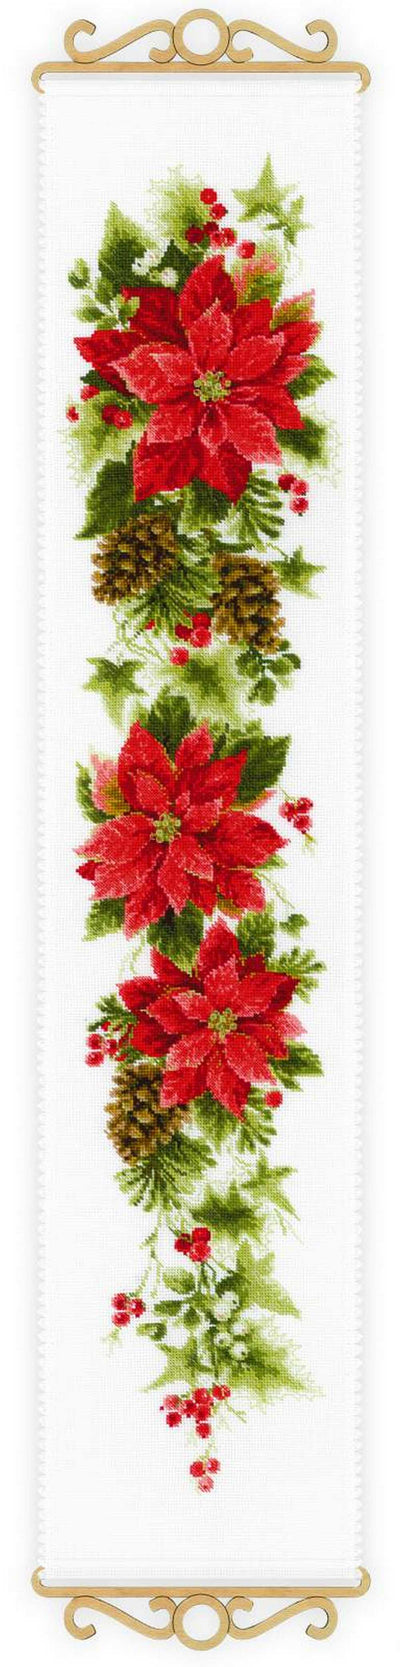 Riolis Cross Stitch Kit - Poinsettia Banner